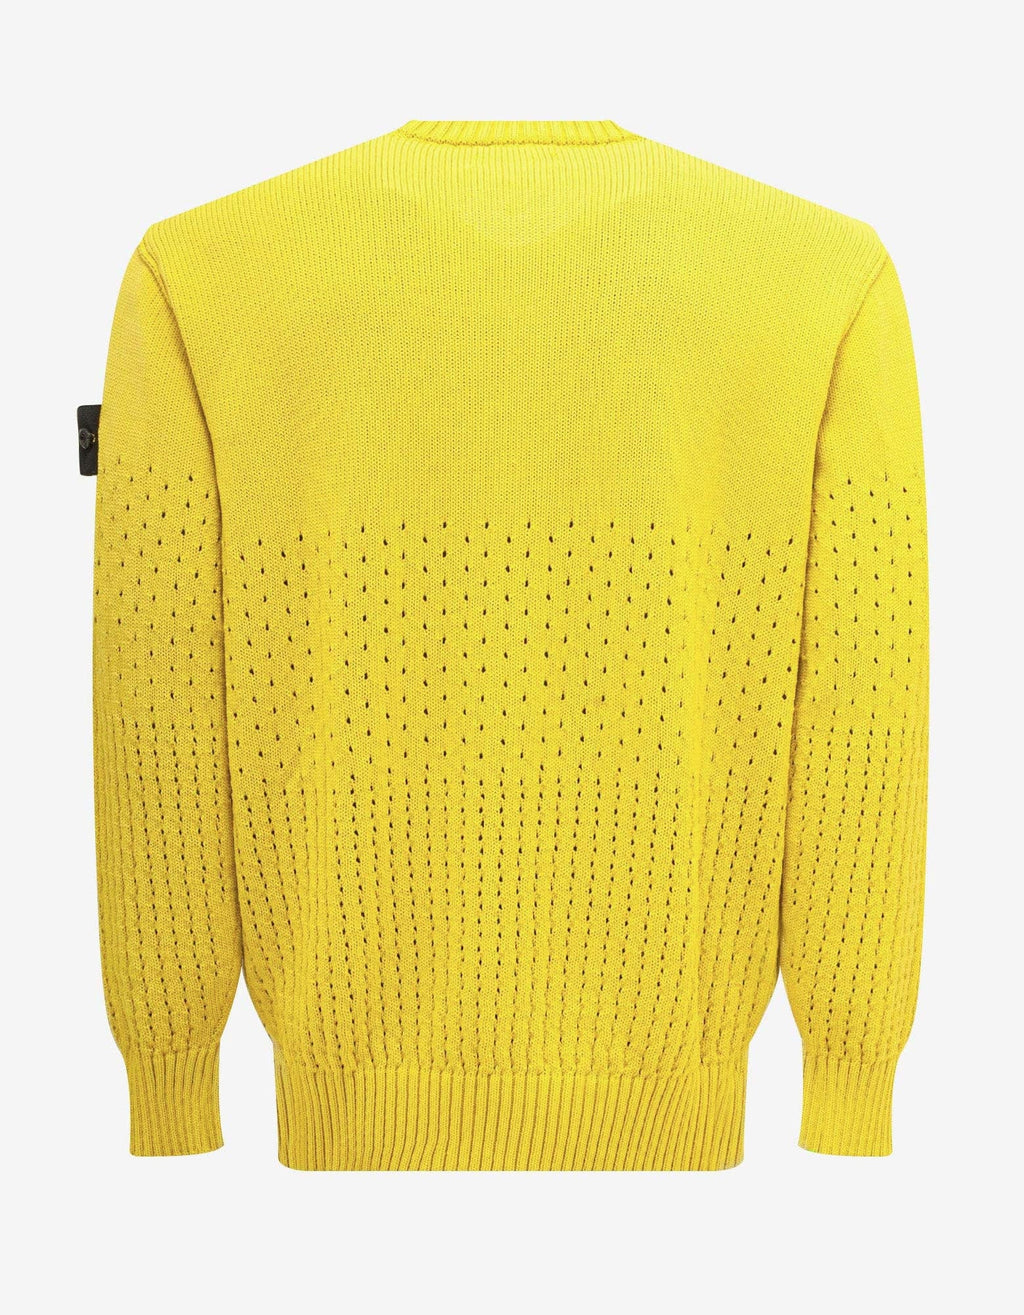 Stone Island Yellow Perforated Sweater